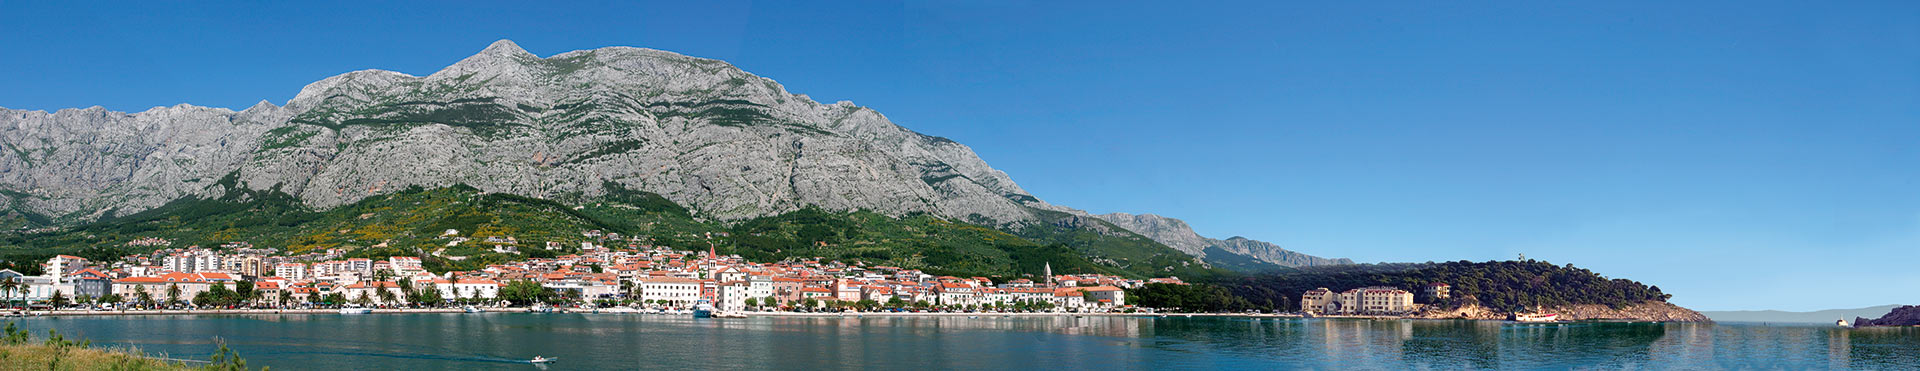 Apartments Croatia - Makarska luxury apartment for 8 persons - Ivan a5